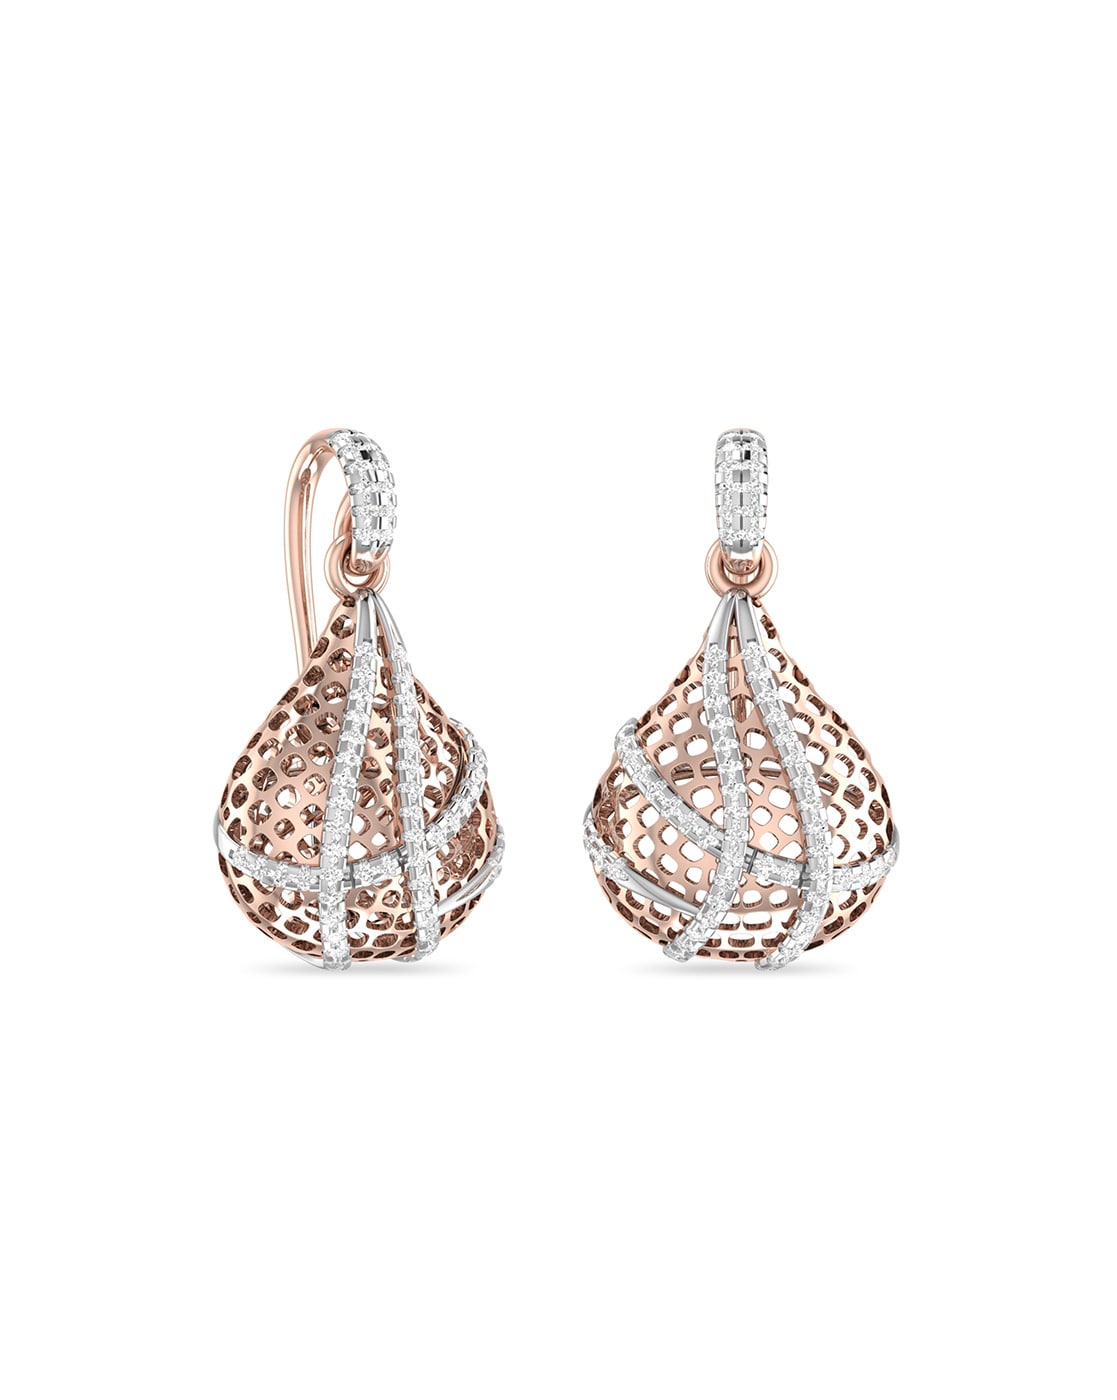 Buy Shaya by CaratLane Discover Oxidised Earrings in 925 Silver Online